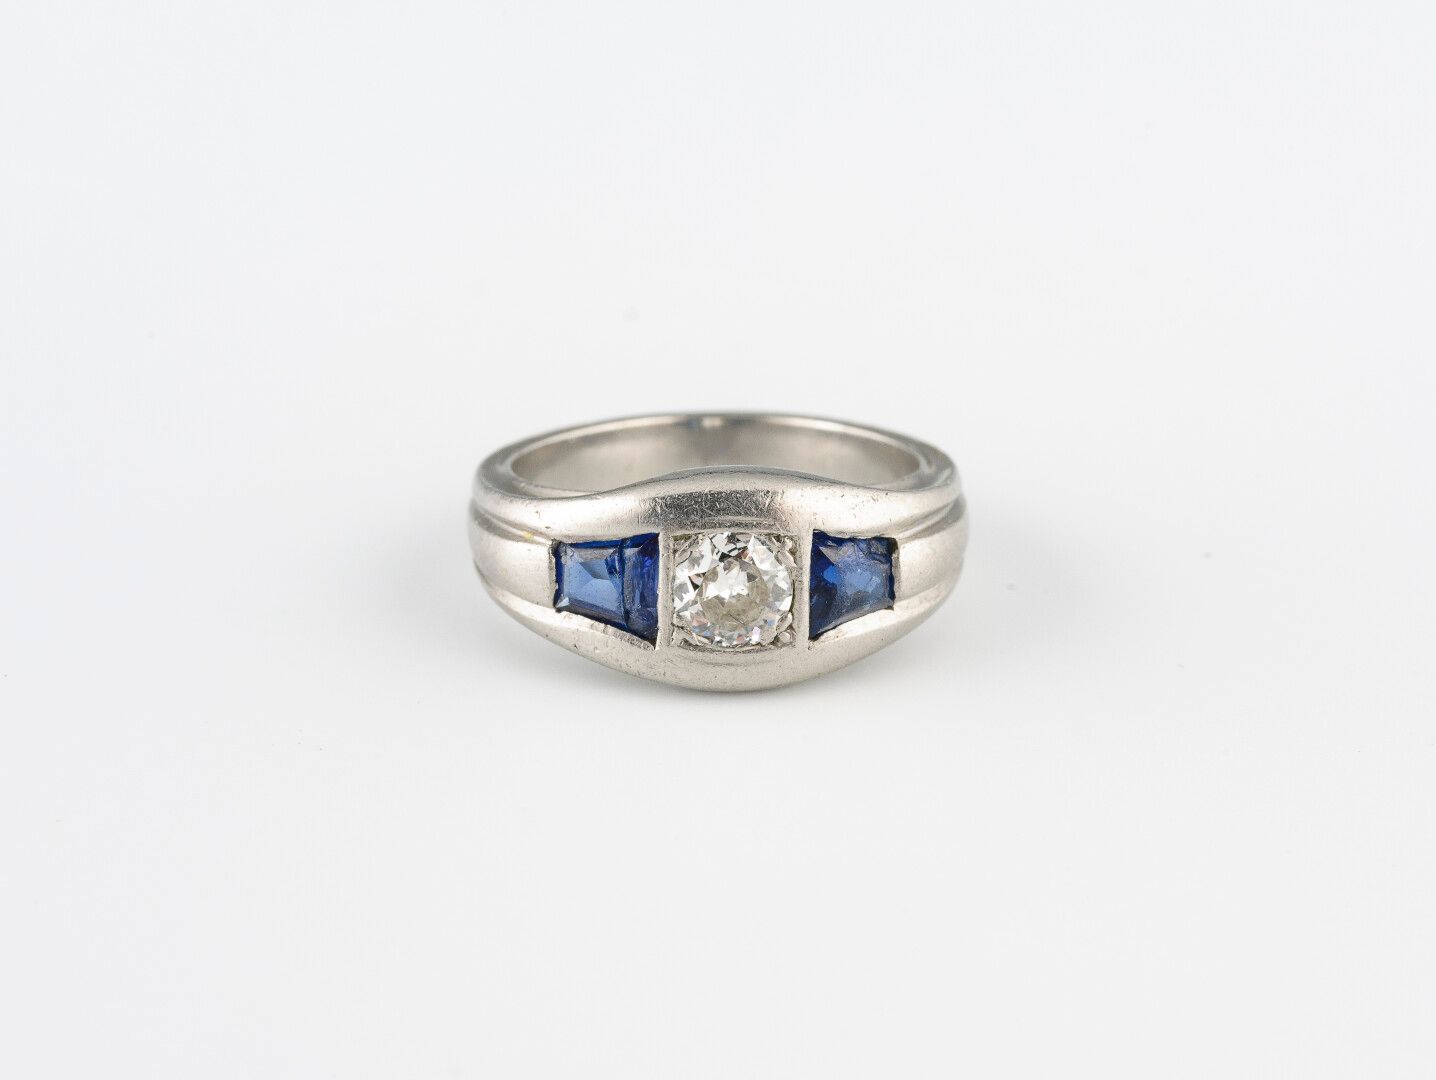 Null JONC RING

铂金方面

镶嵌有一颗0.50克拉的TA钻石和两颗校准的蓝宝石

约1935年

毛重：13.73克 - TD.58

(划痕)